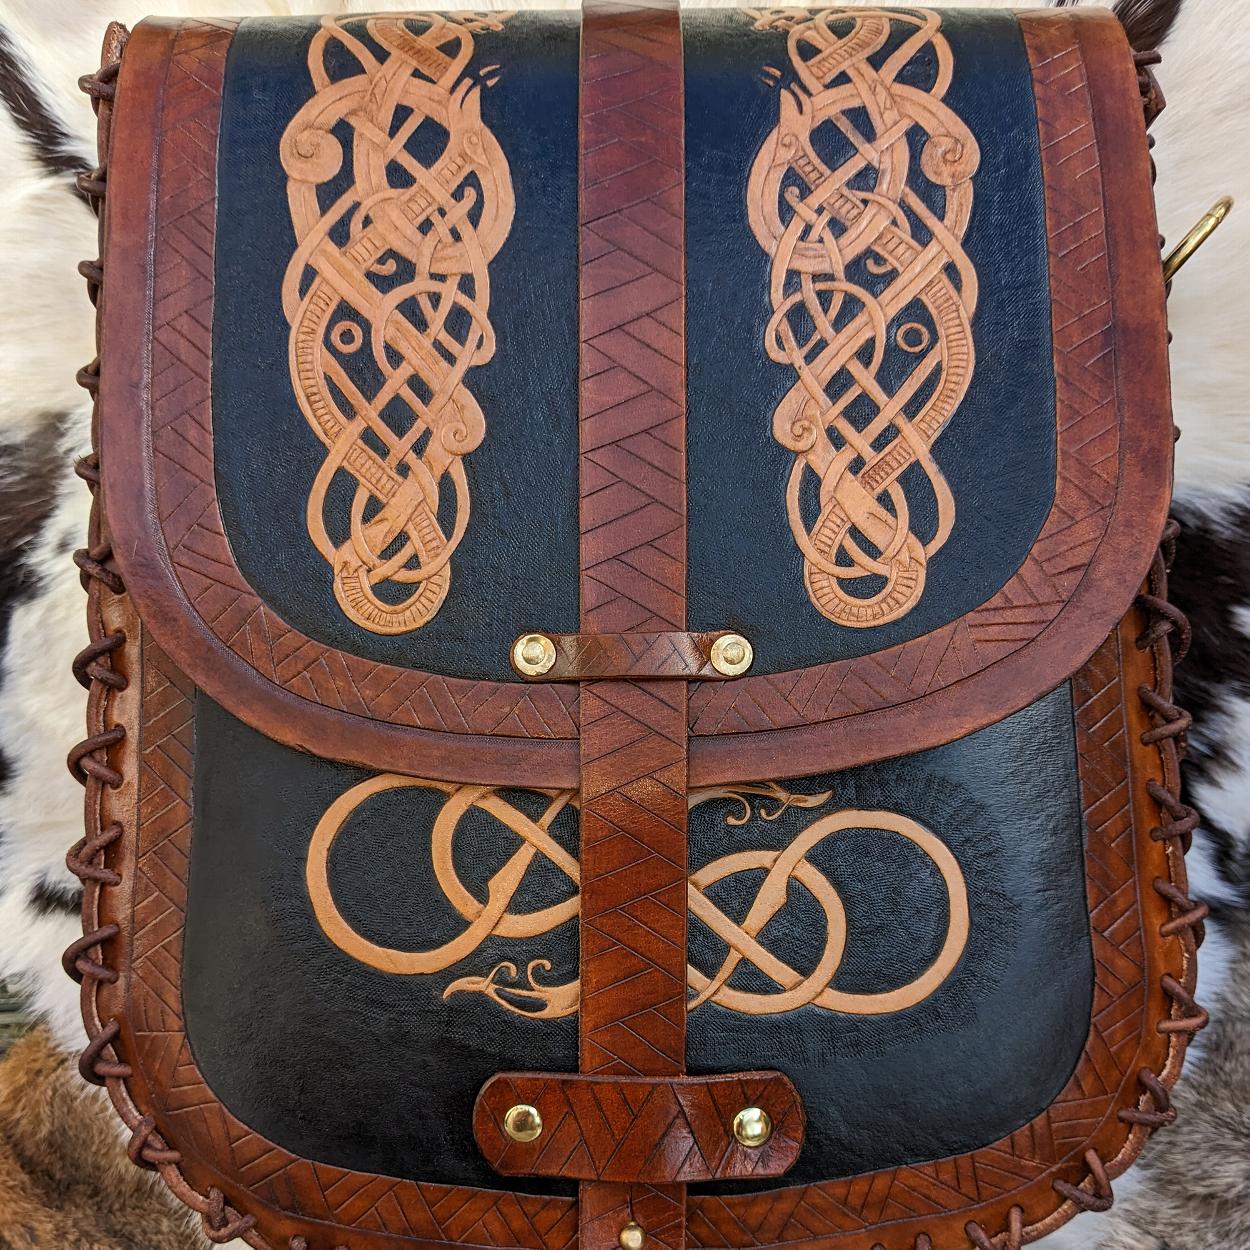 Handmade leather satchel